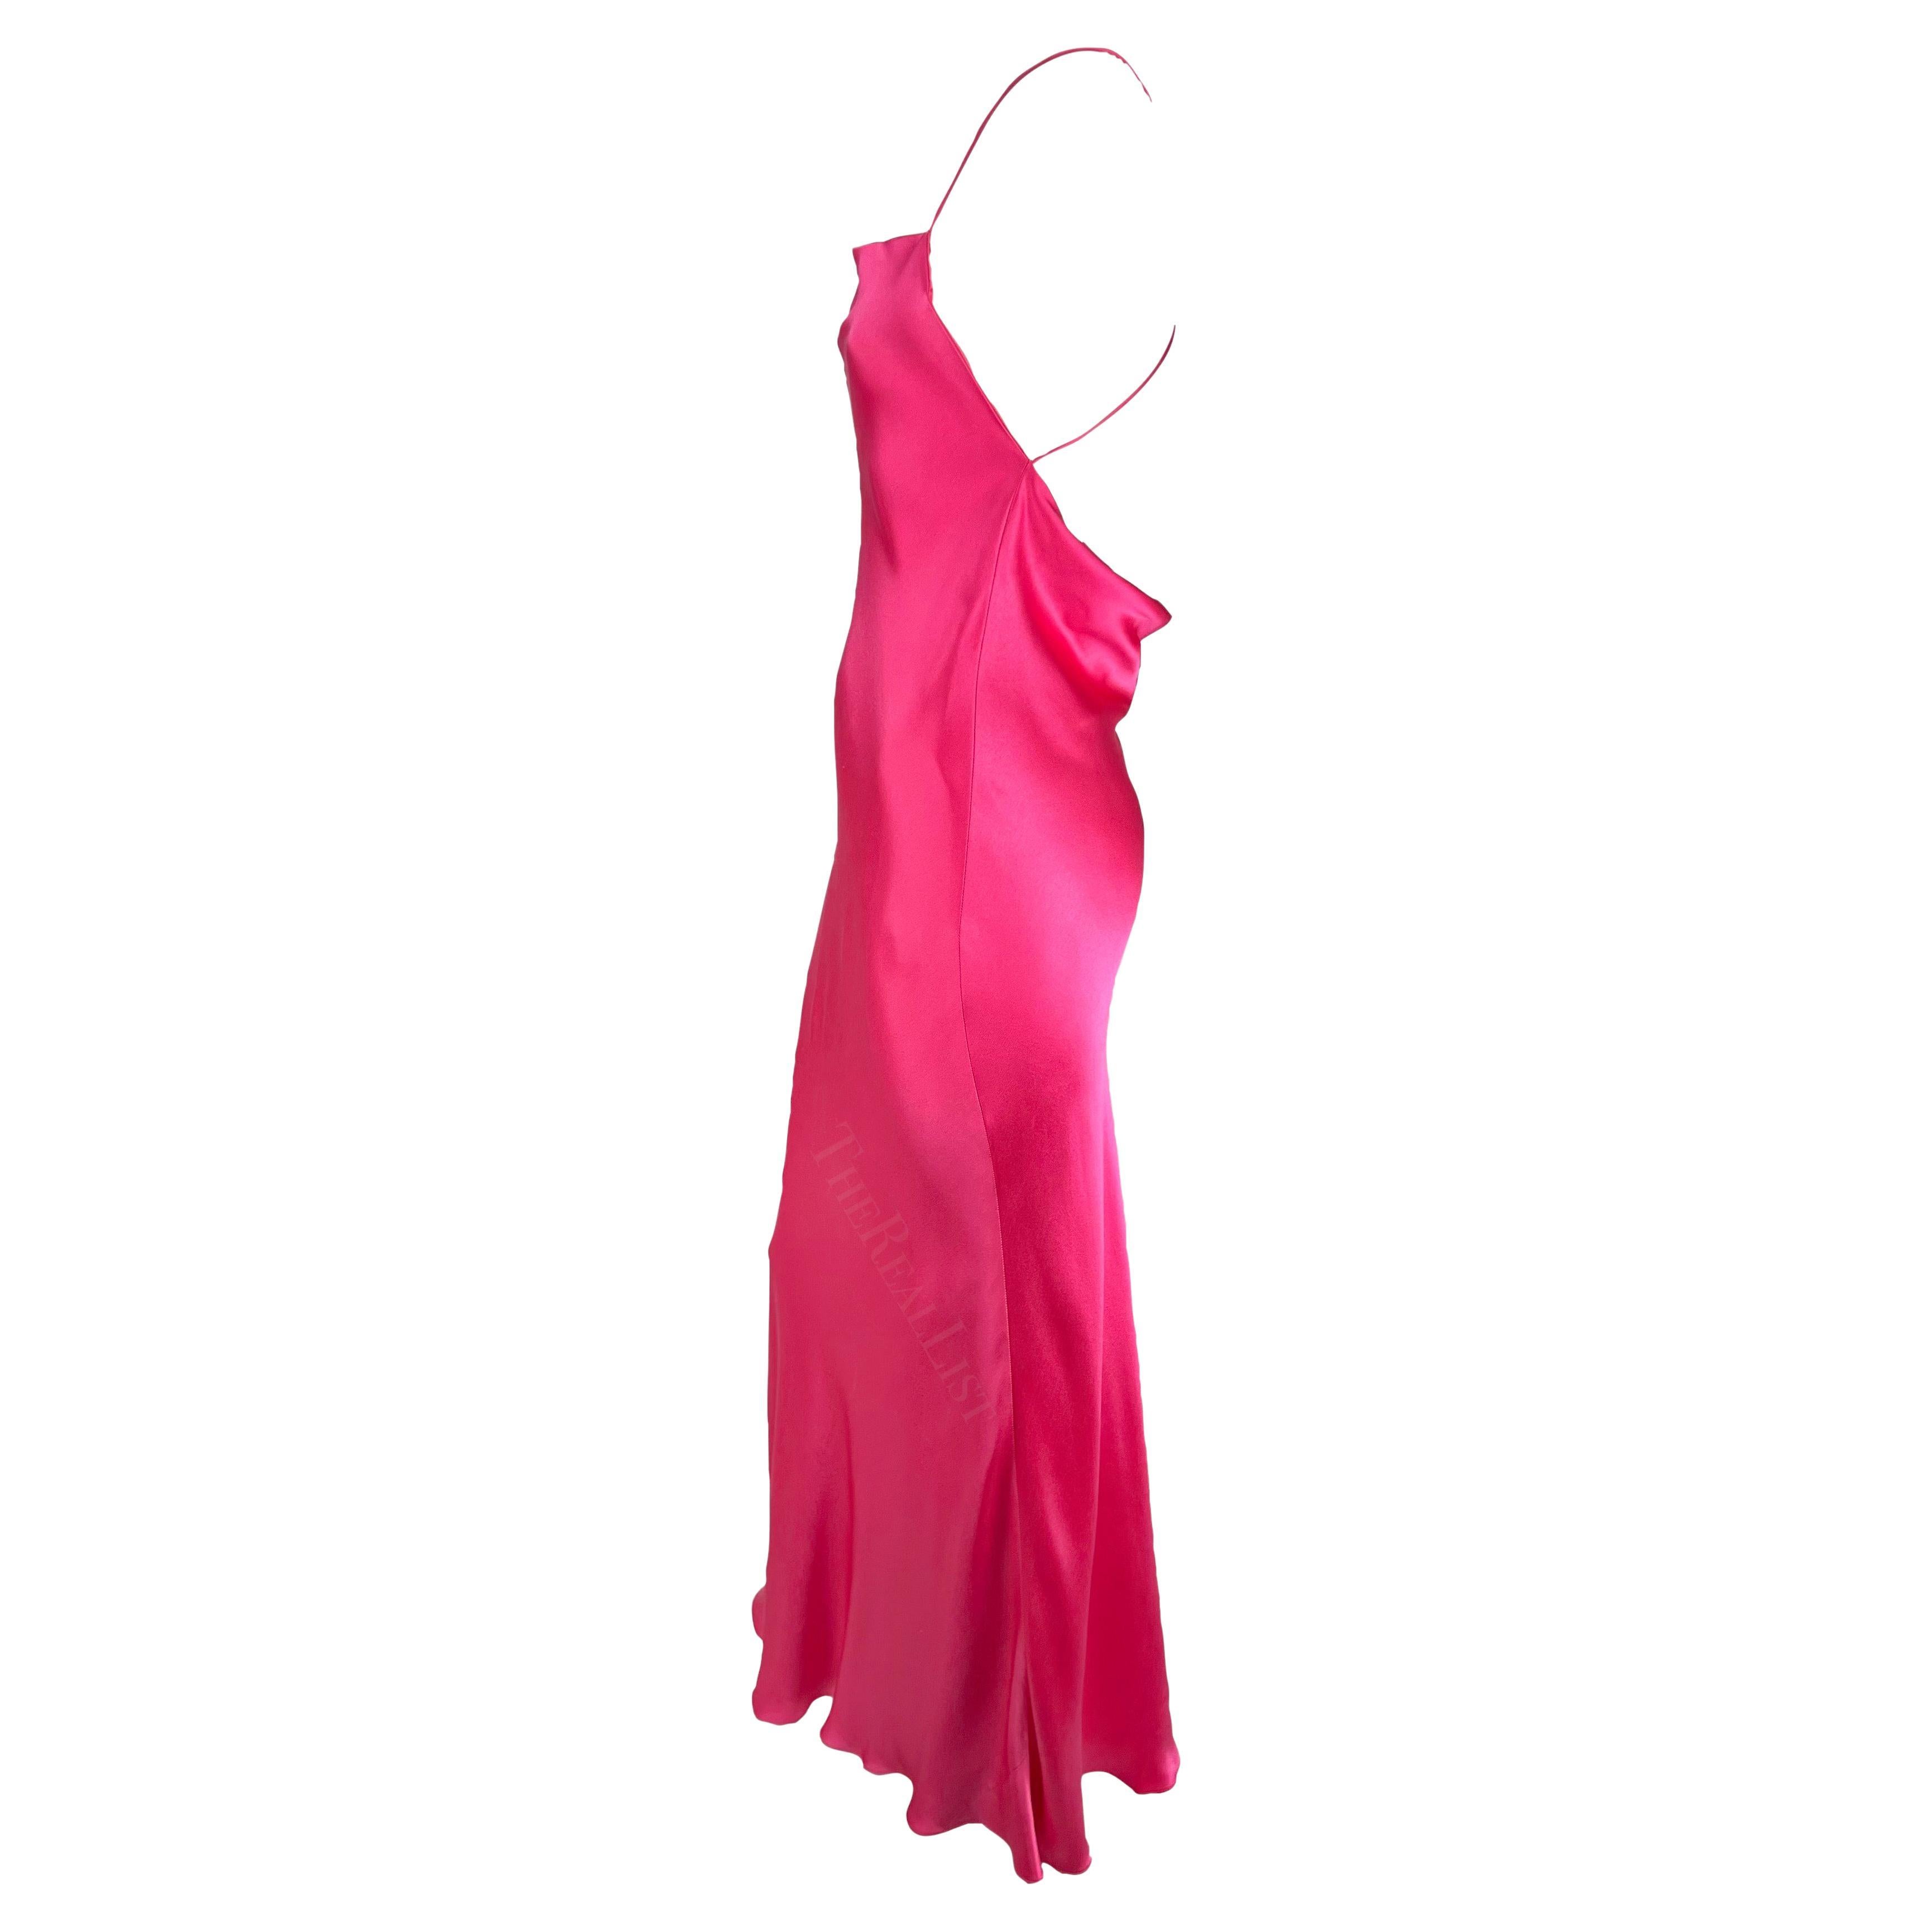 S/S 2004 Ralph Lauren Runway Hot Pink Silk Satin Backless Slip Gown  For Sale 1